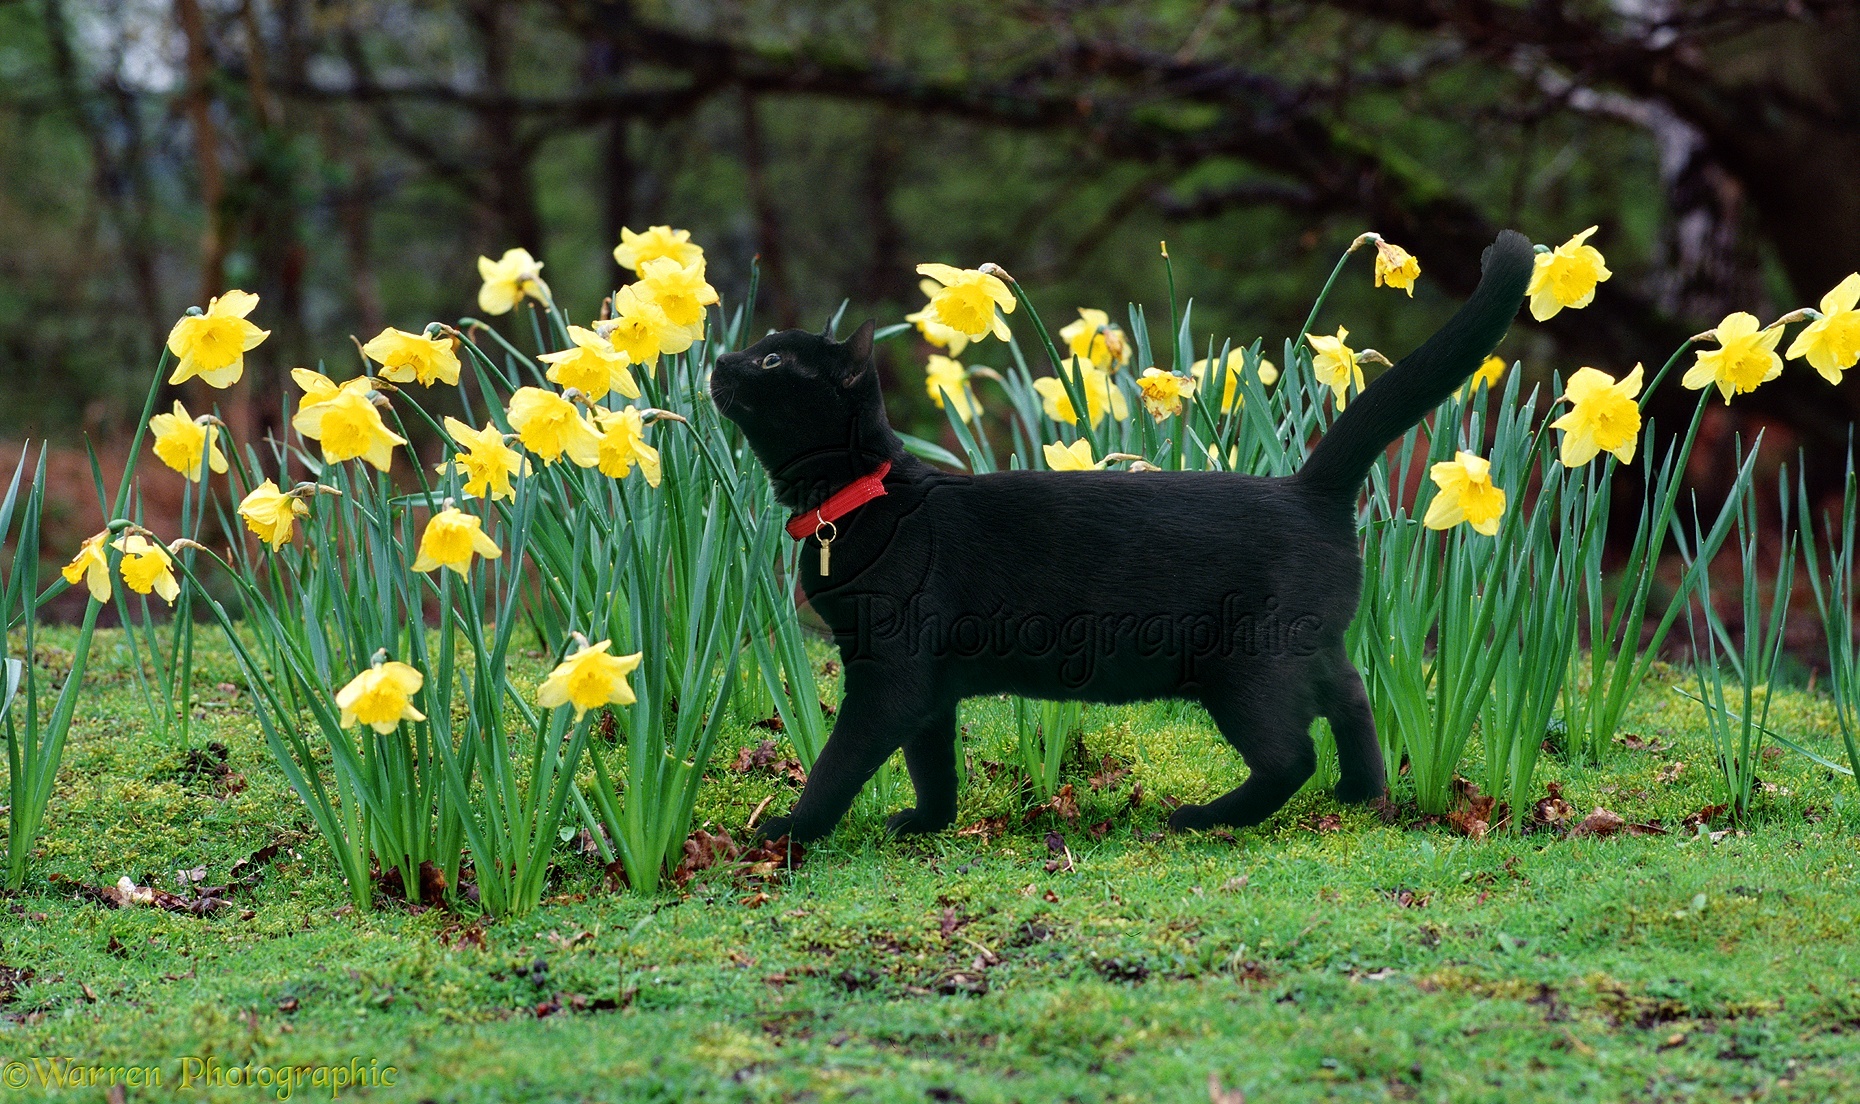 01220-Black-cat-sniffing-daffodils.jpg